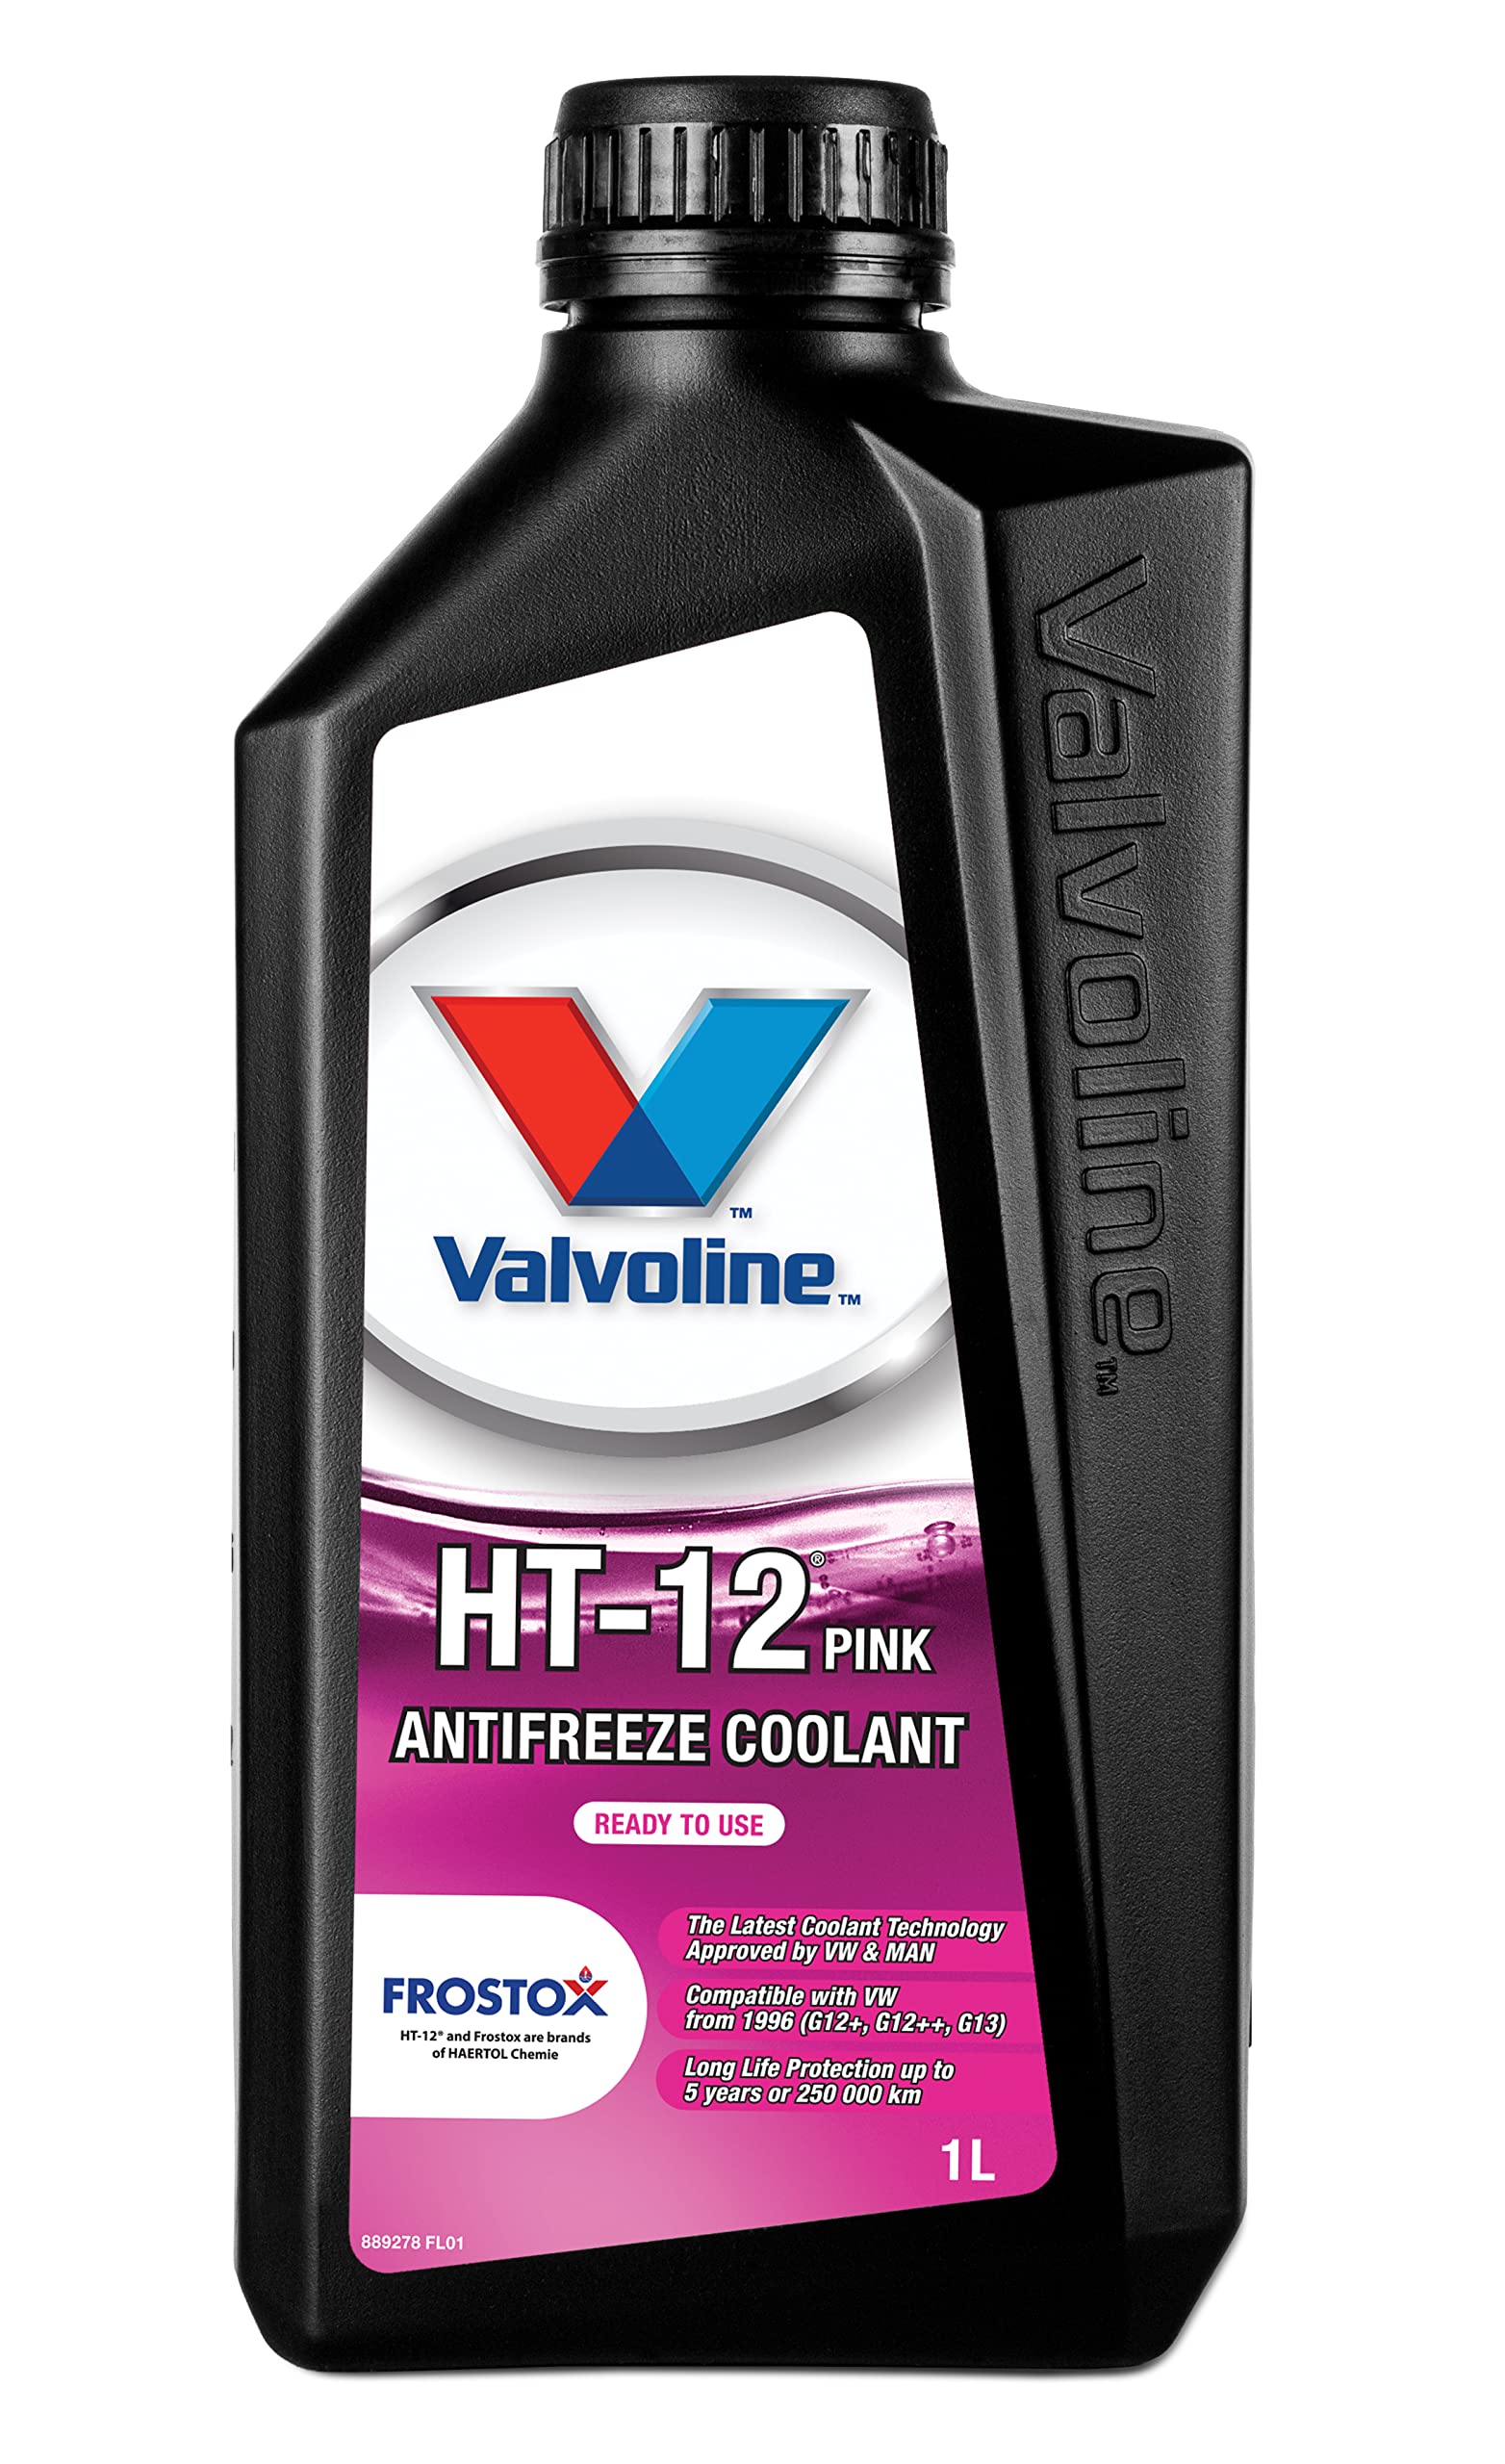 Valvoline Antifreeze Coolant HT-12 Pink Ready-to-Use, 1L von Valvoline